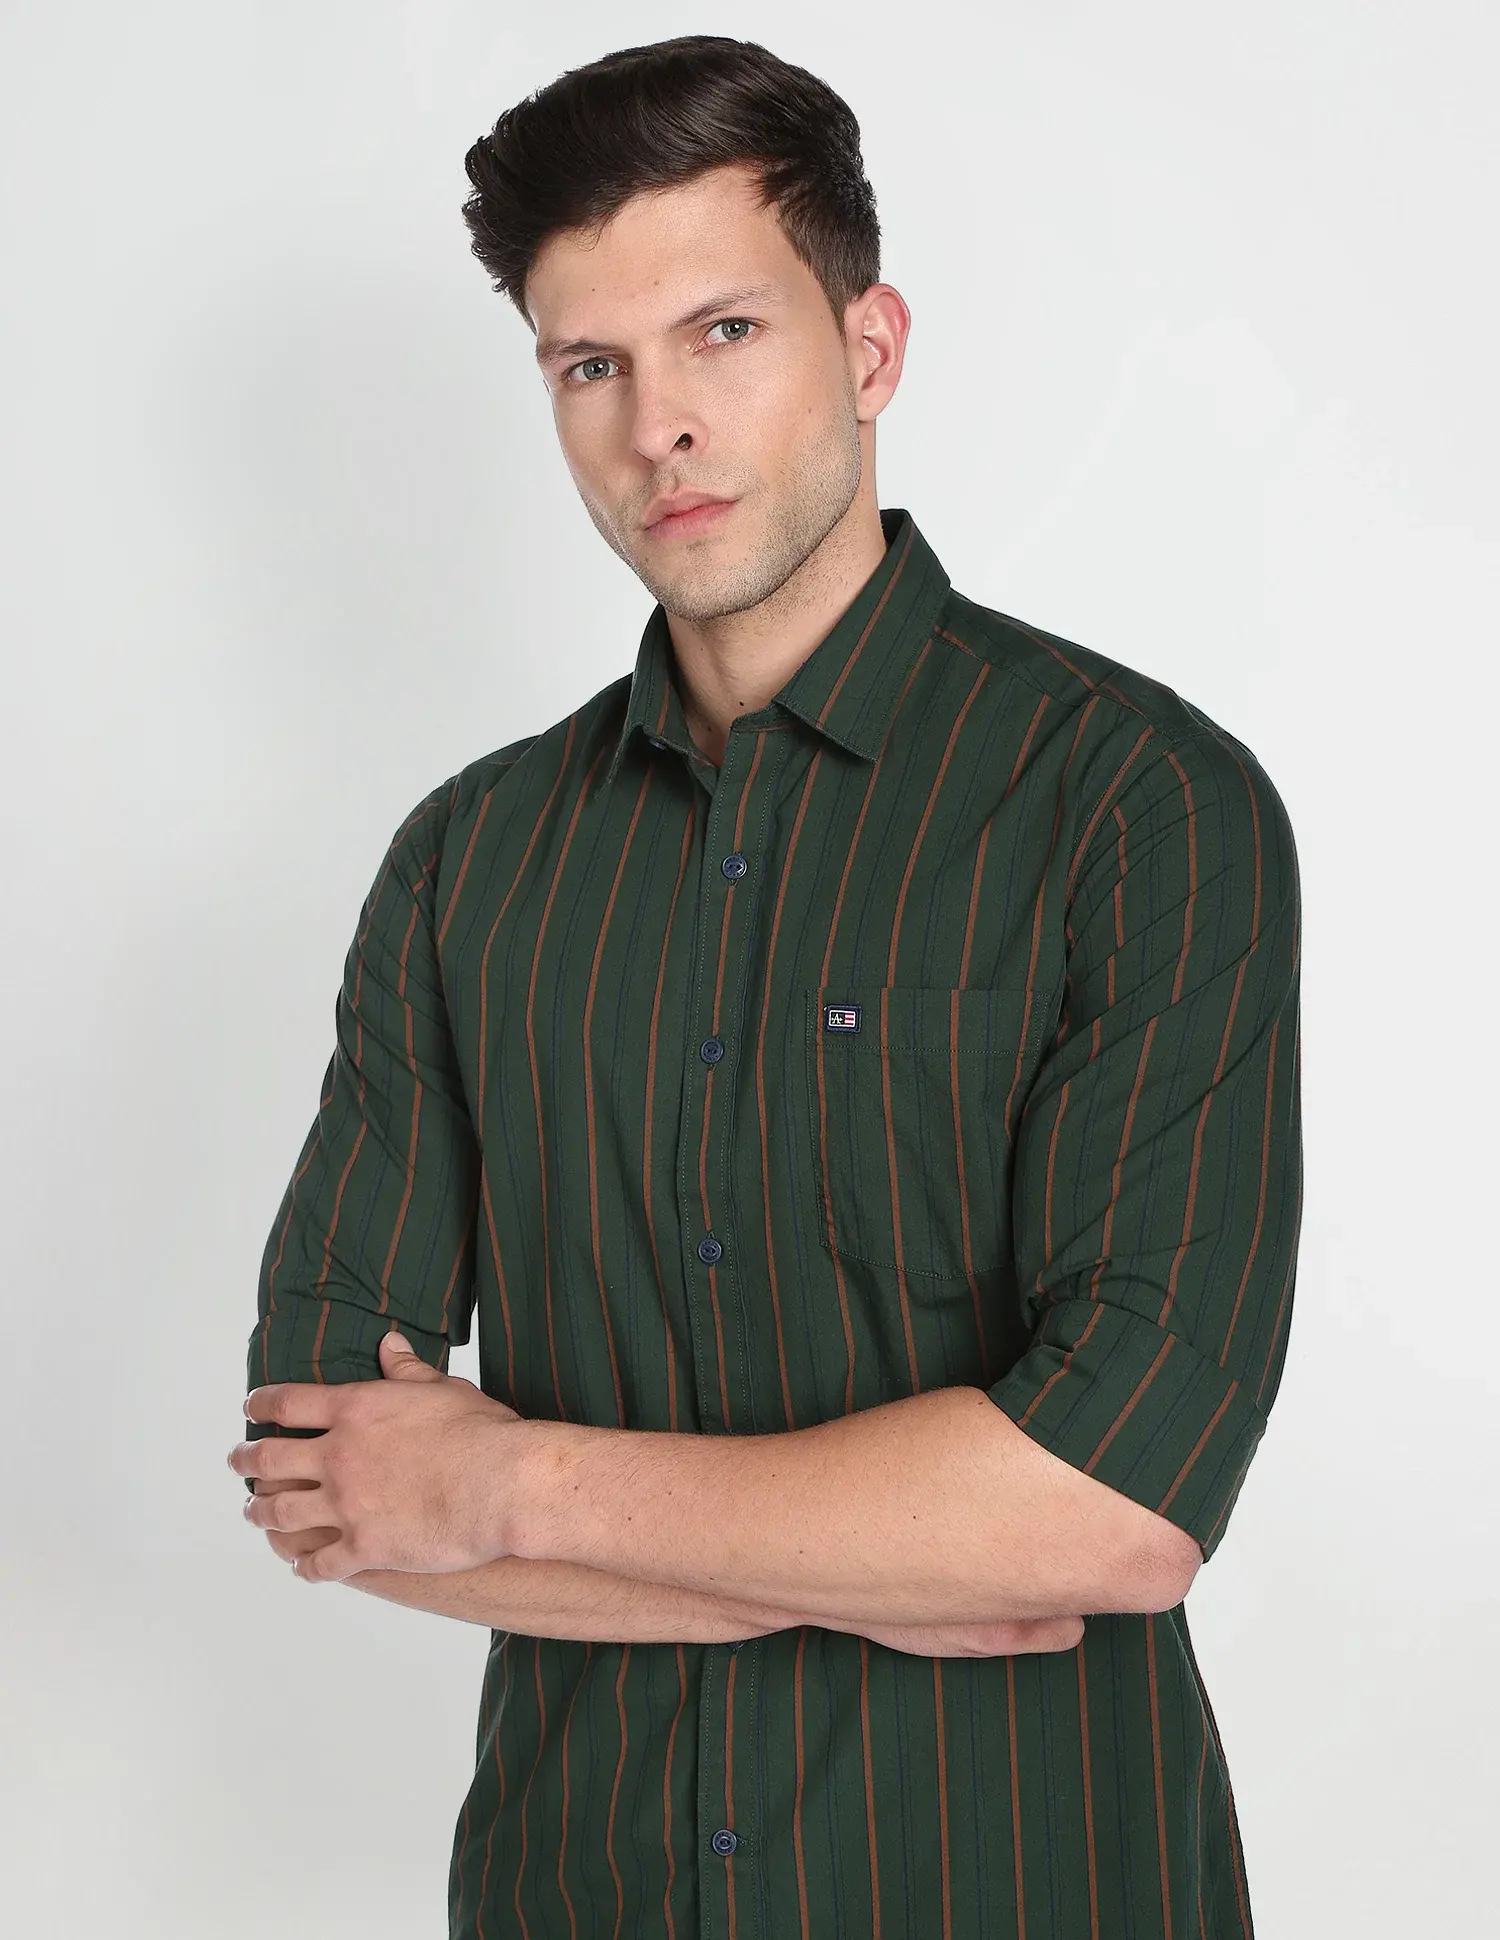 ARROW SPORTS Vertical Stripe Cotton Casual Shirt